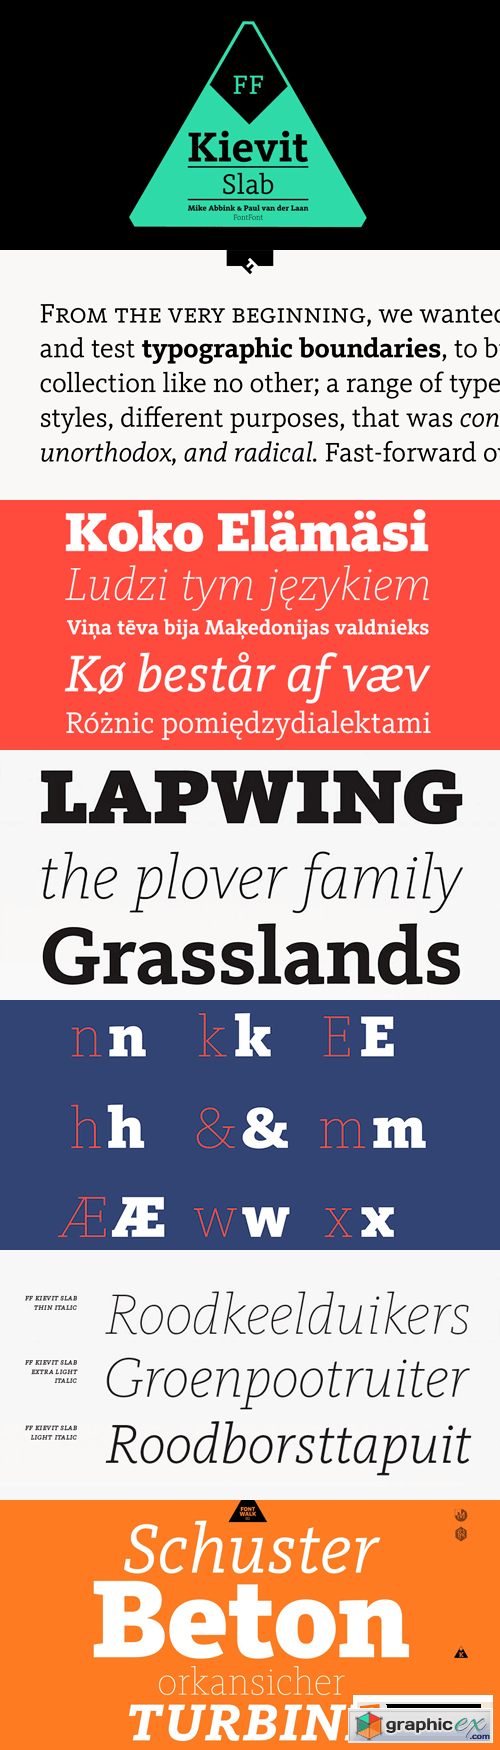 FF Kievit Slab Font Family - 18 Fonts for $659